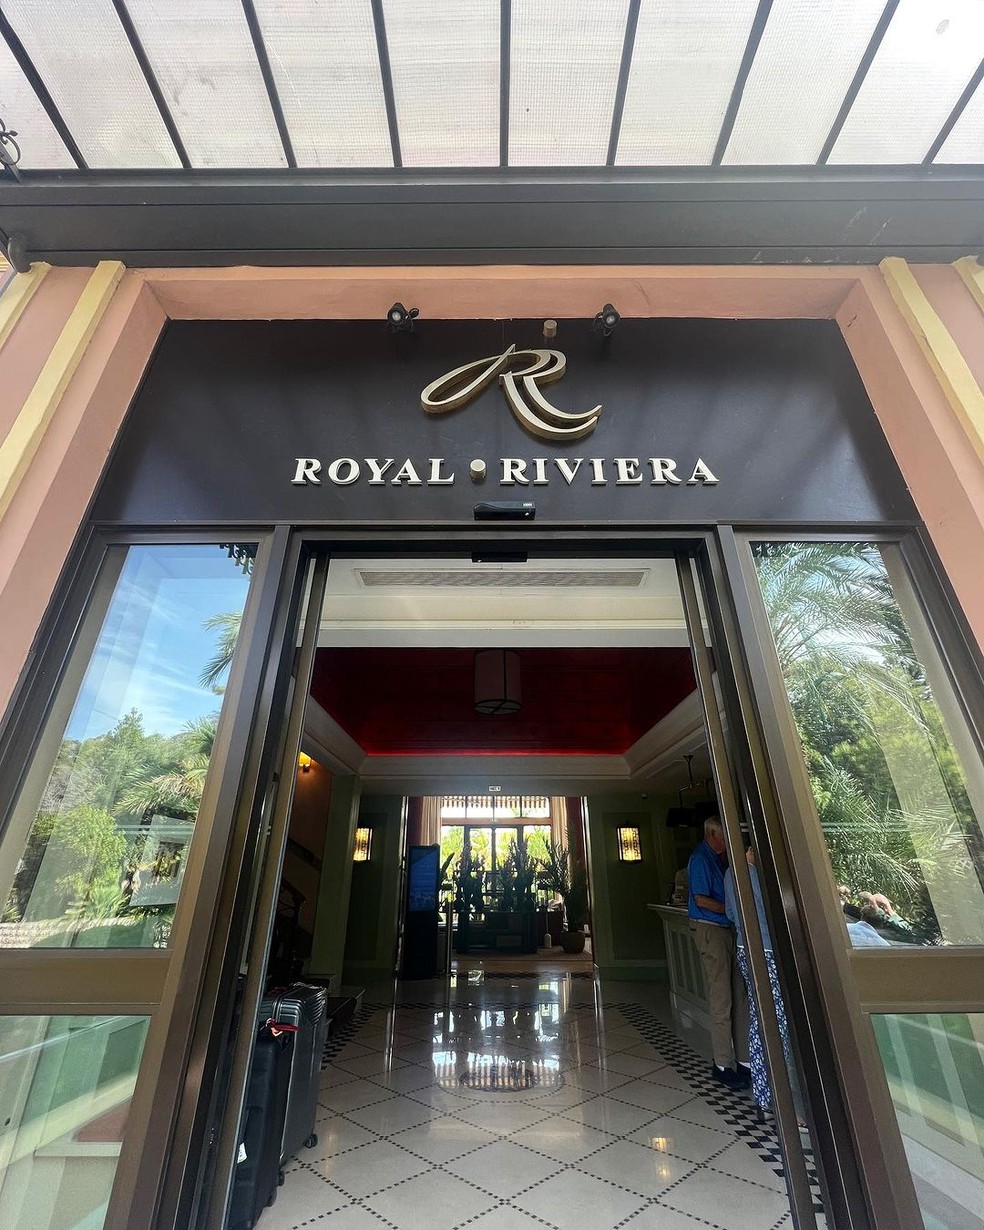 Hotel Royal-Riviera, França — Foto: Instagram @isabellafiorentino / Reprodução